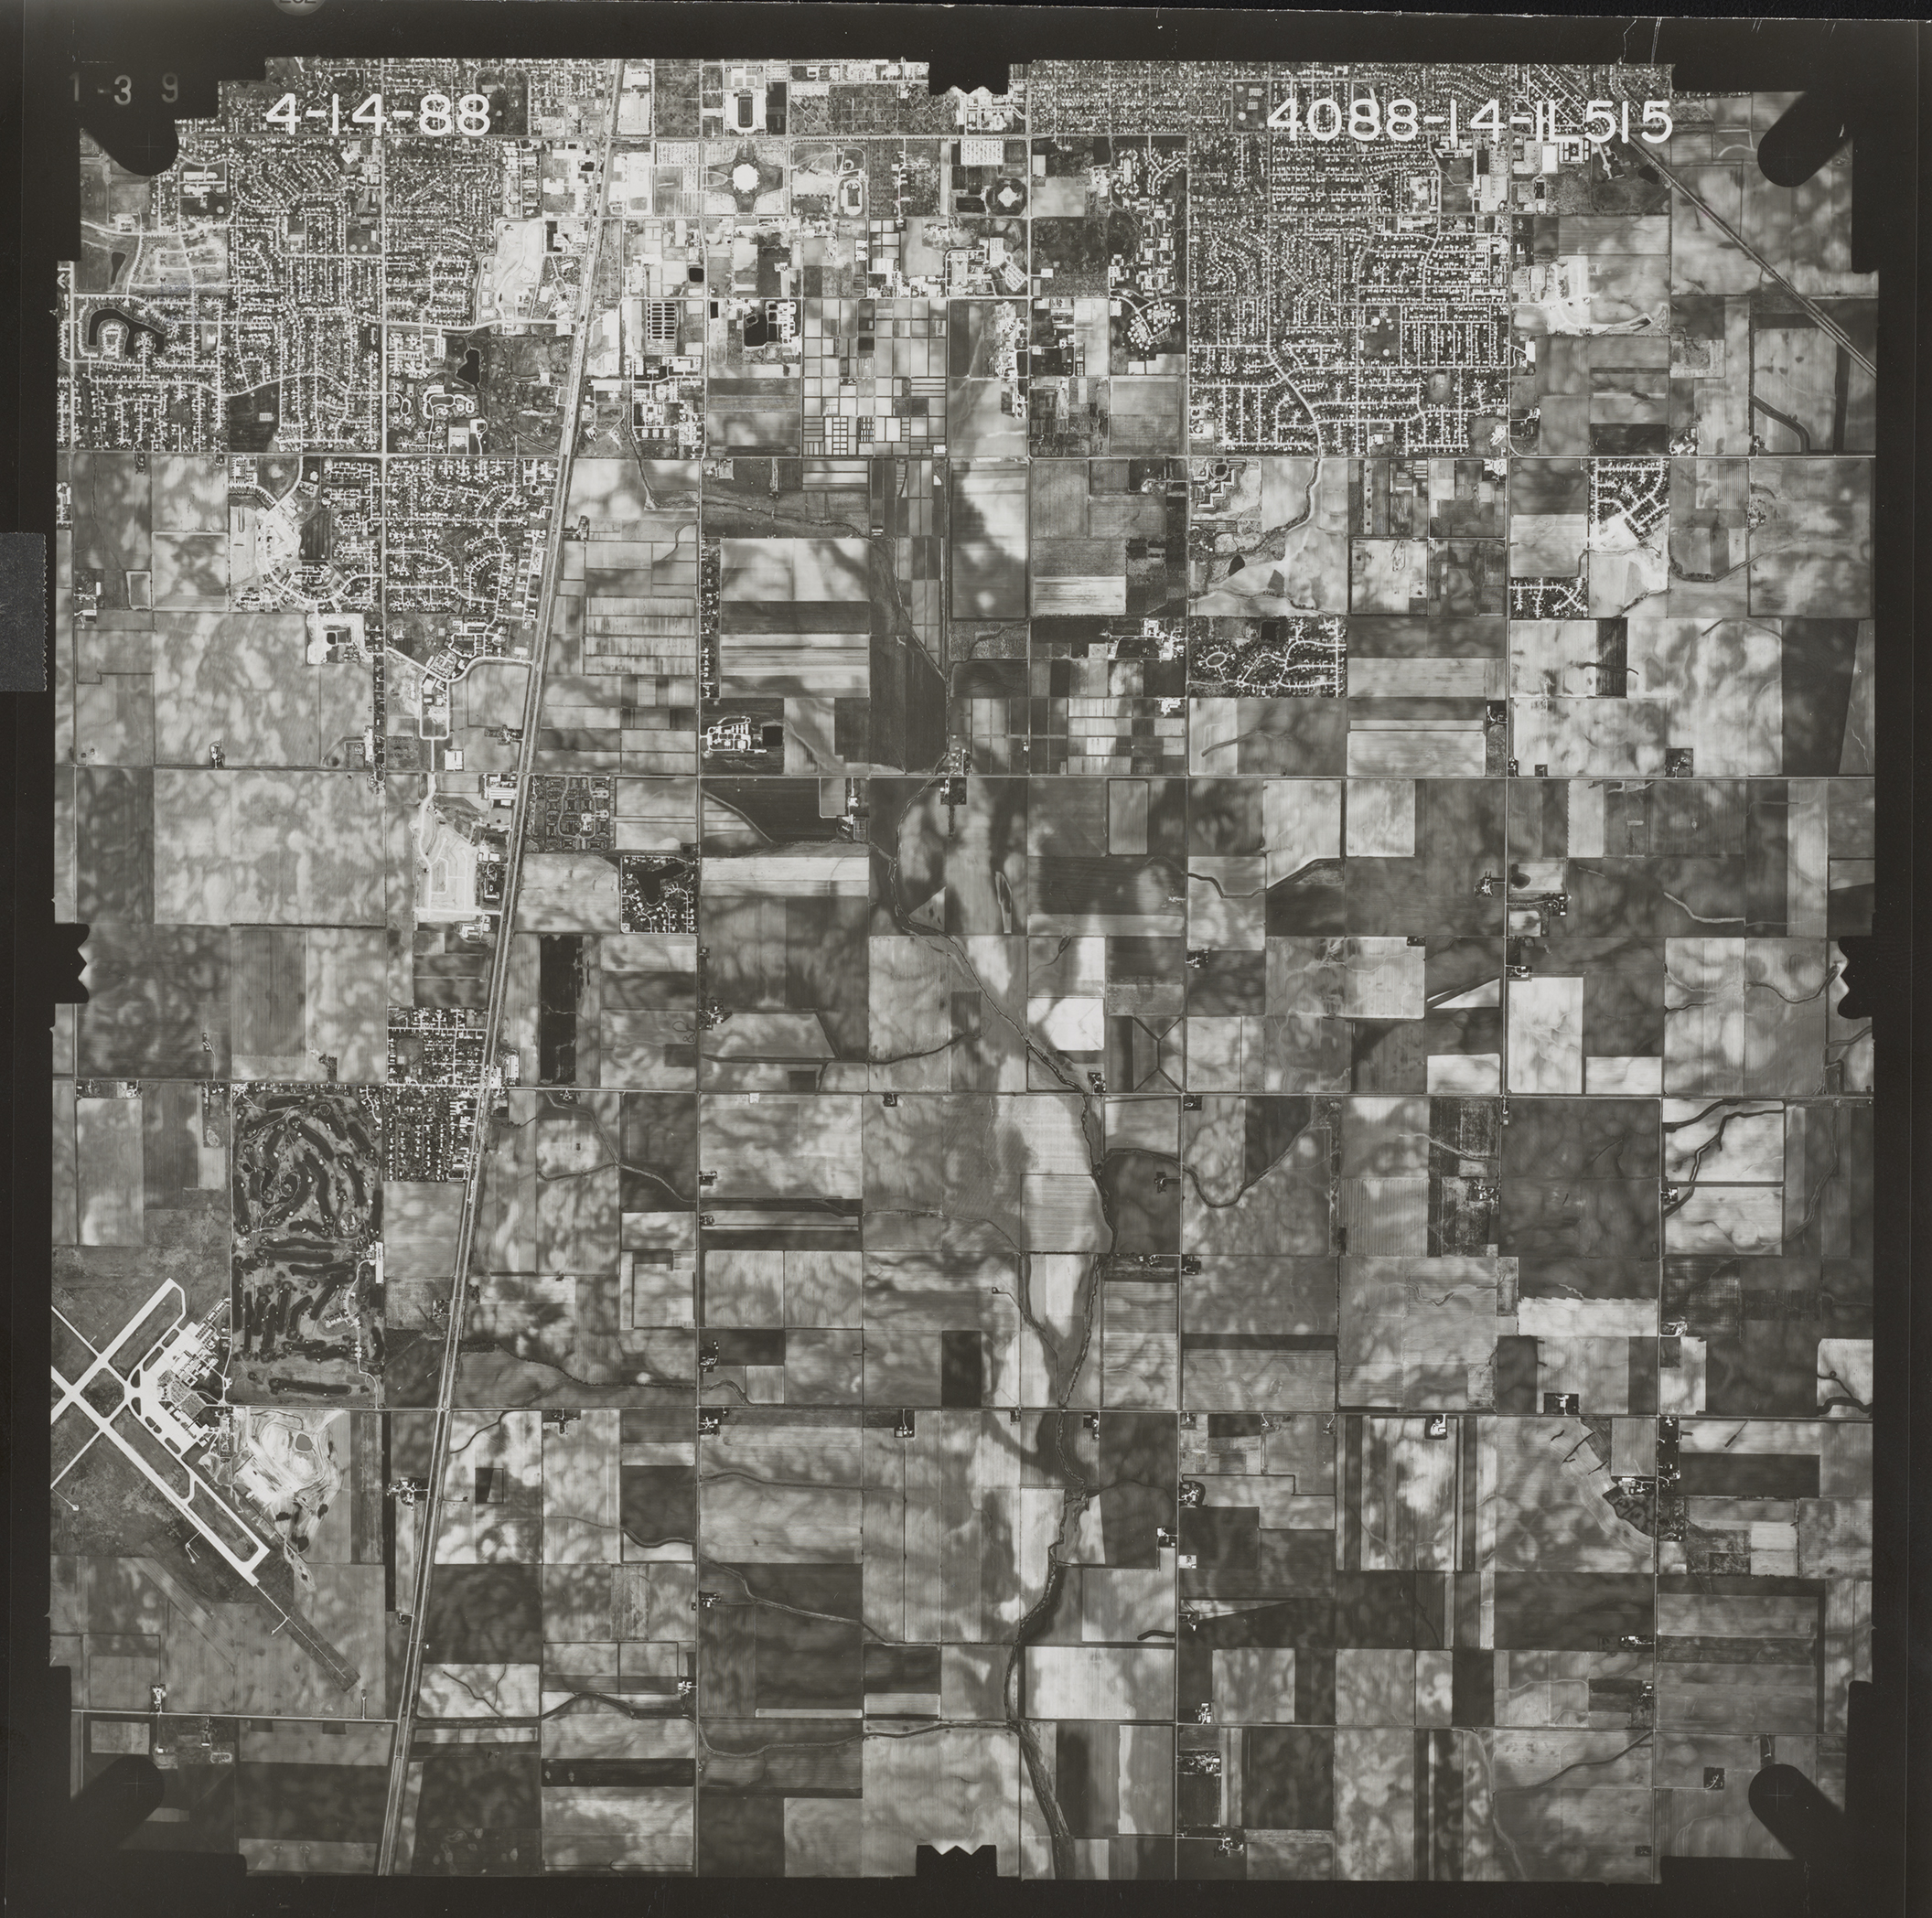 NAPP 1988 aerial photographs of Illinois